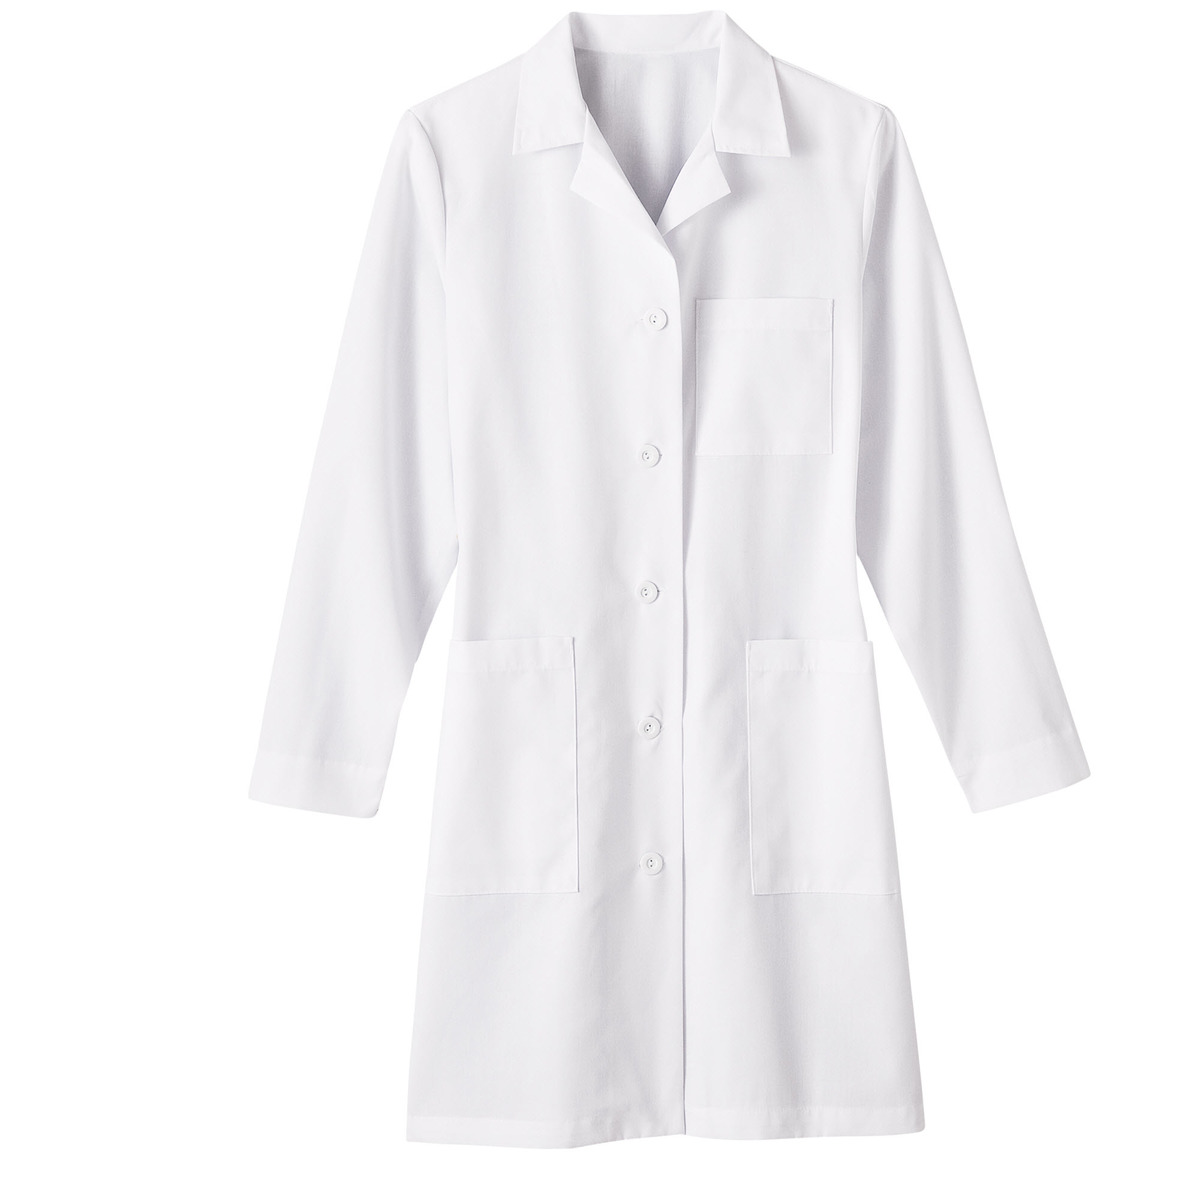 Buy/Shop Labcoat – Old Lab Coats Online in CO – Work Clothing 